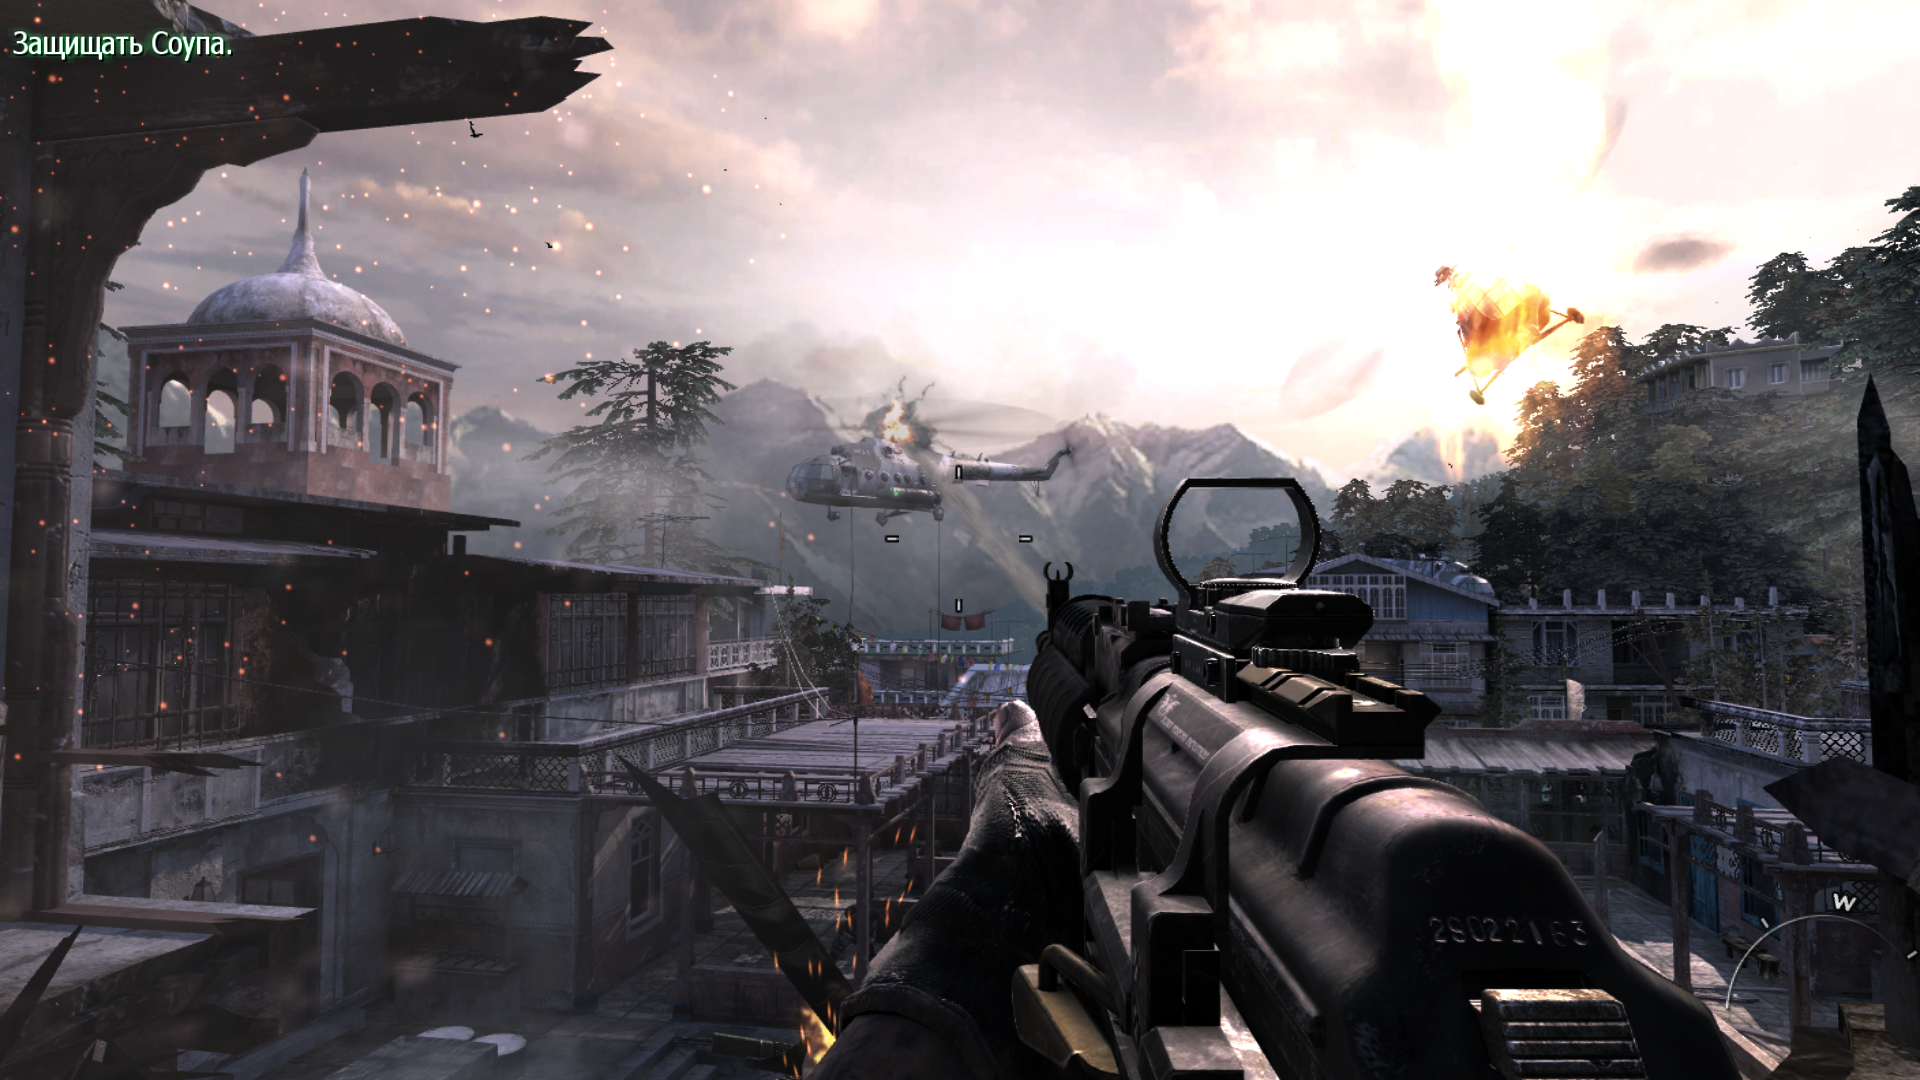 Игра тудока. Call of Duty: Modern Warfare 3. Call of Duty mw3. Калл оф дьюти Модерн варфаре 3. Калл оф дьюти Модерн варфэйр 3.